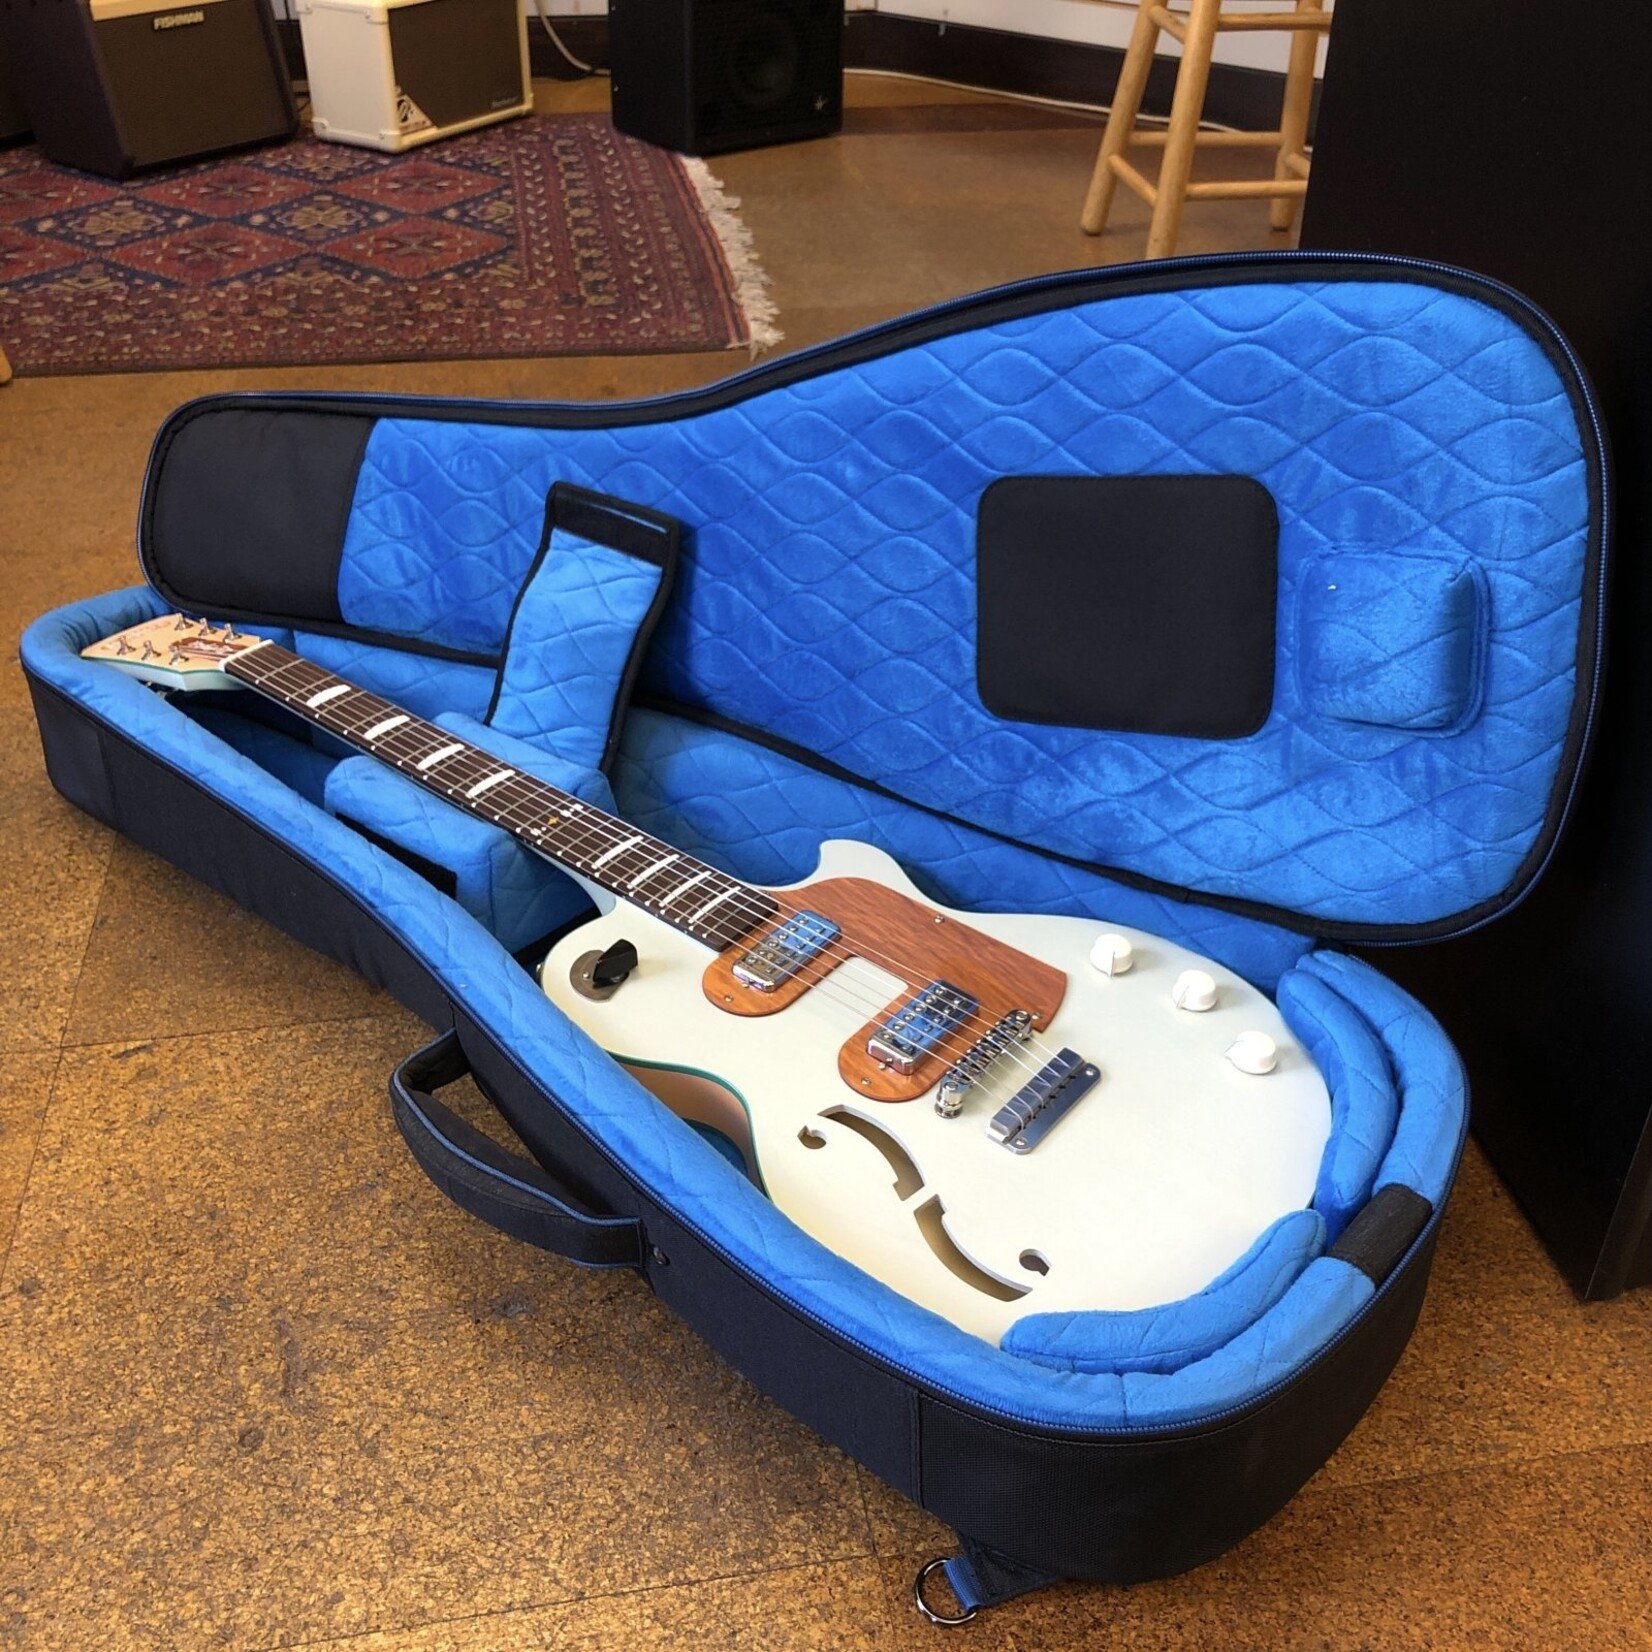 Lockhorn Lockhorn Zipper #18 Semi-hollow Electric Guitar Pistachio/Orange Sherbet 2024 Floor Model w/Padded Gig Bag